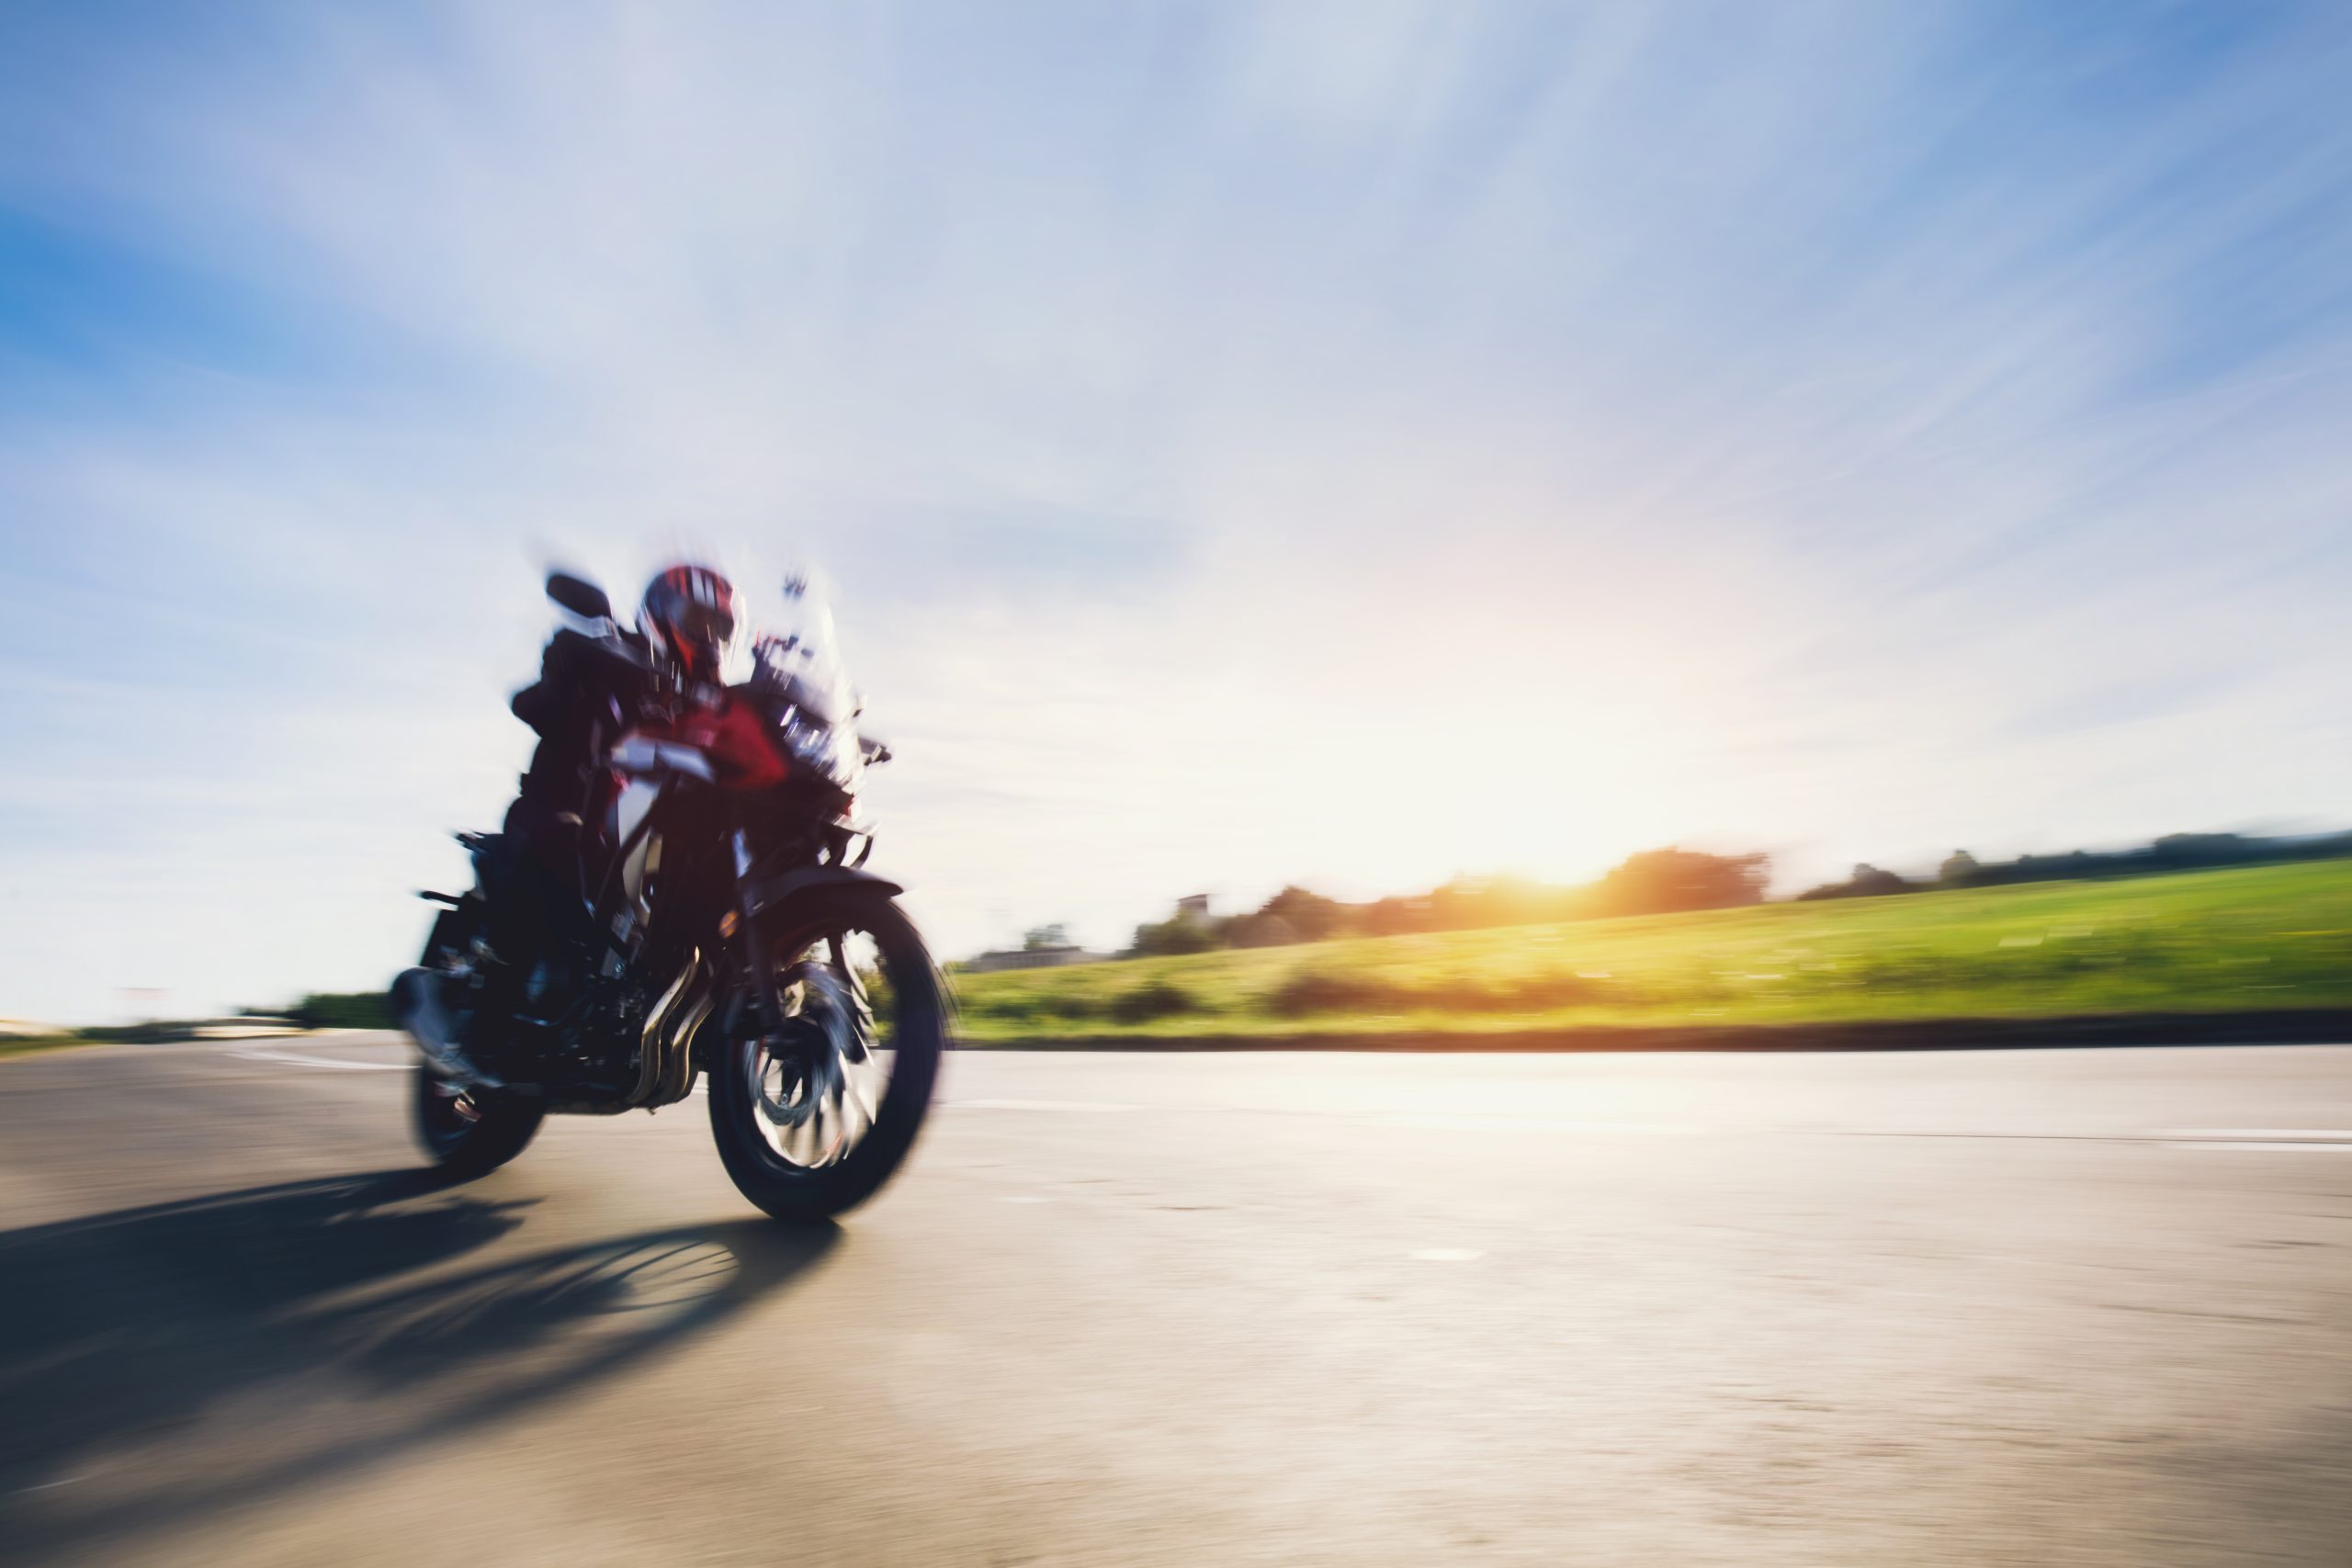 Rider on motorcycle in motion on asphalt road.